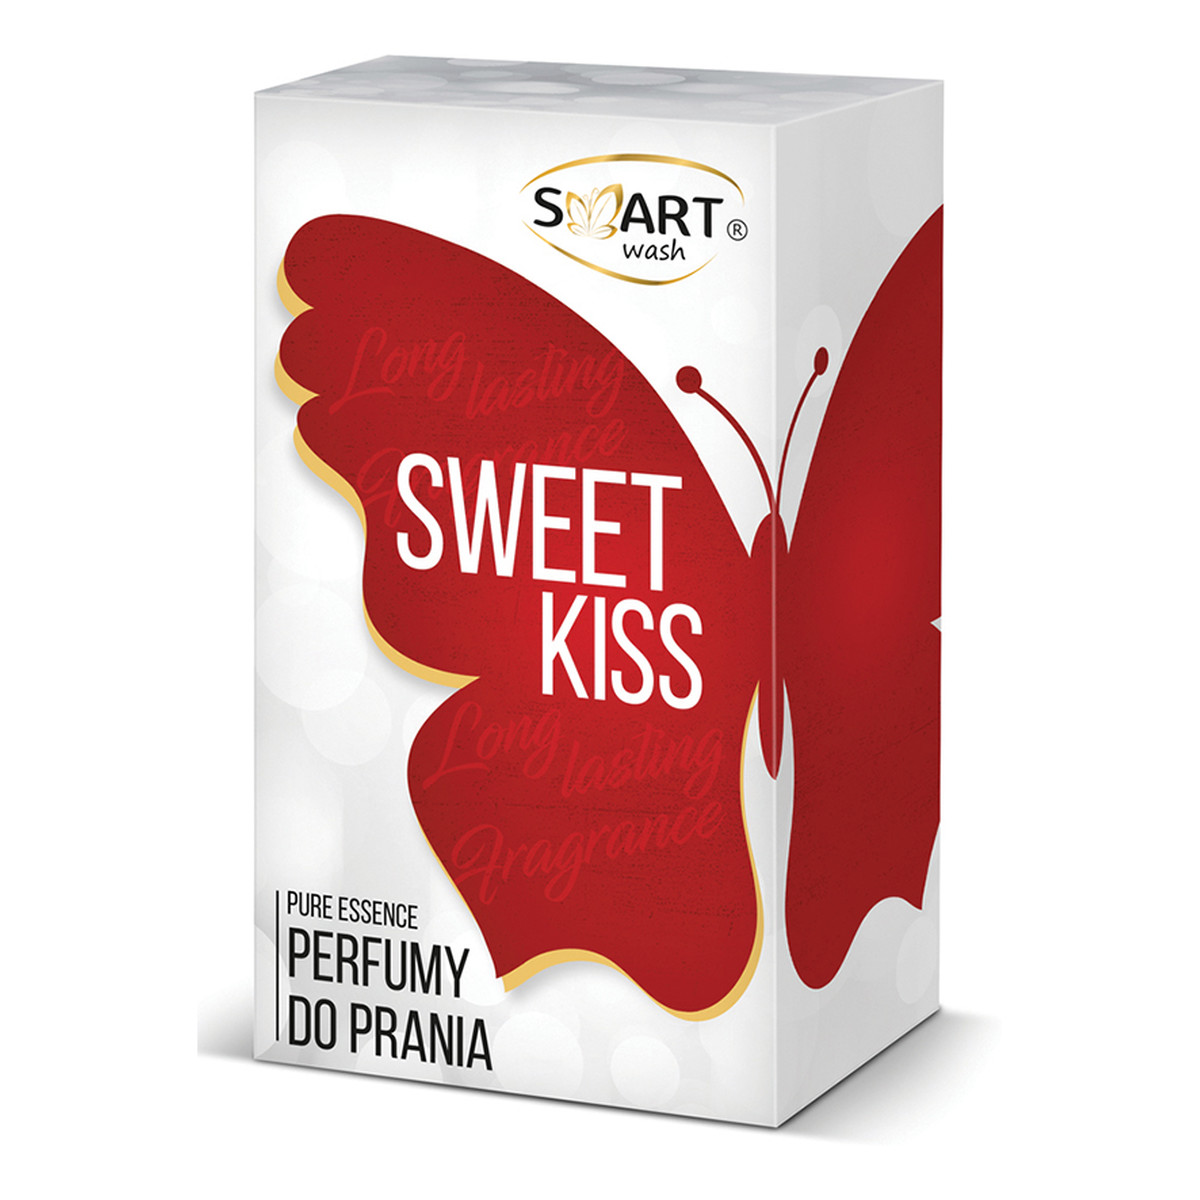 Smart Wash Perfumy do prania Sweet kiss 100ml